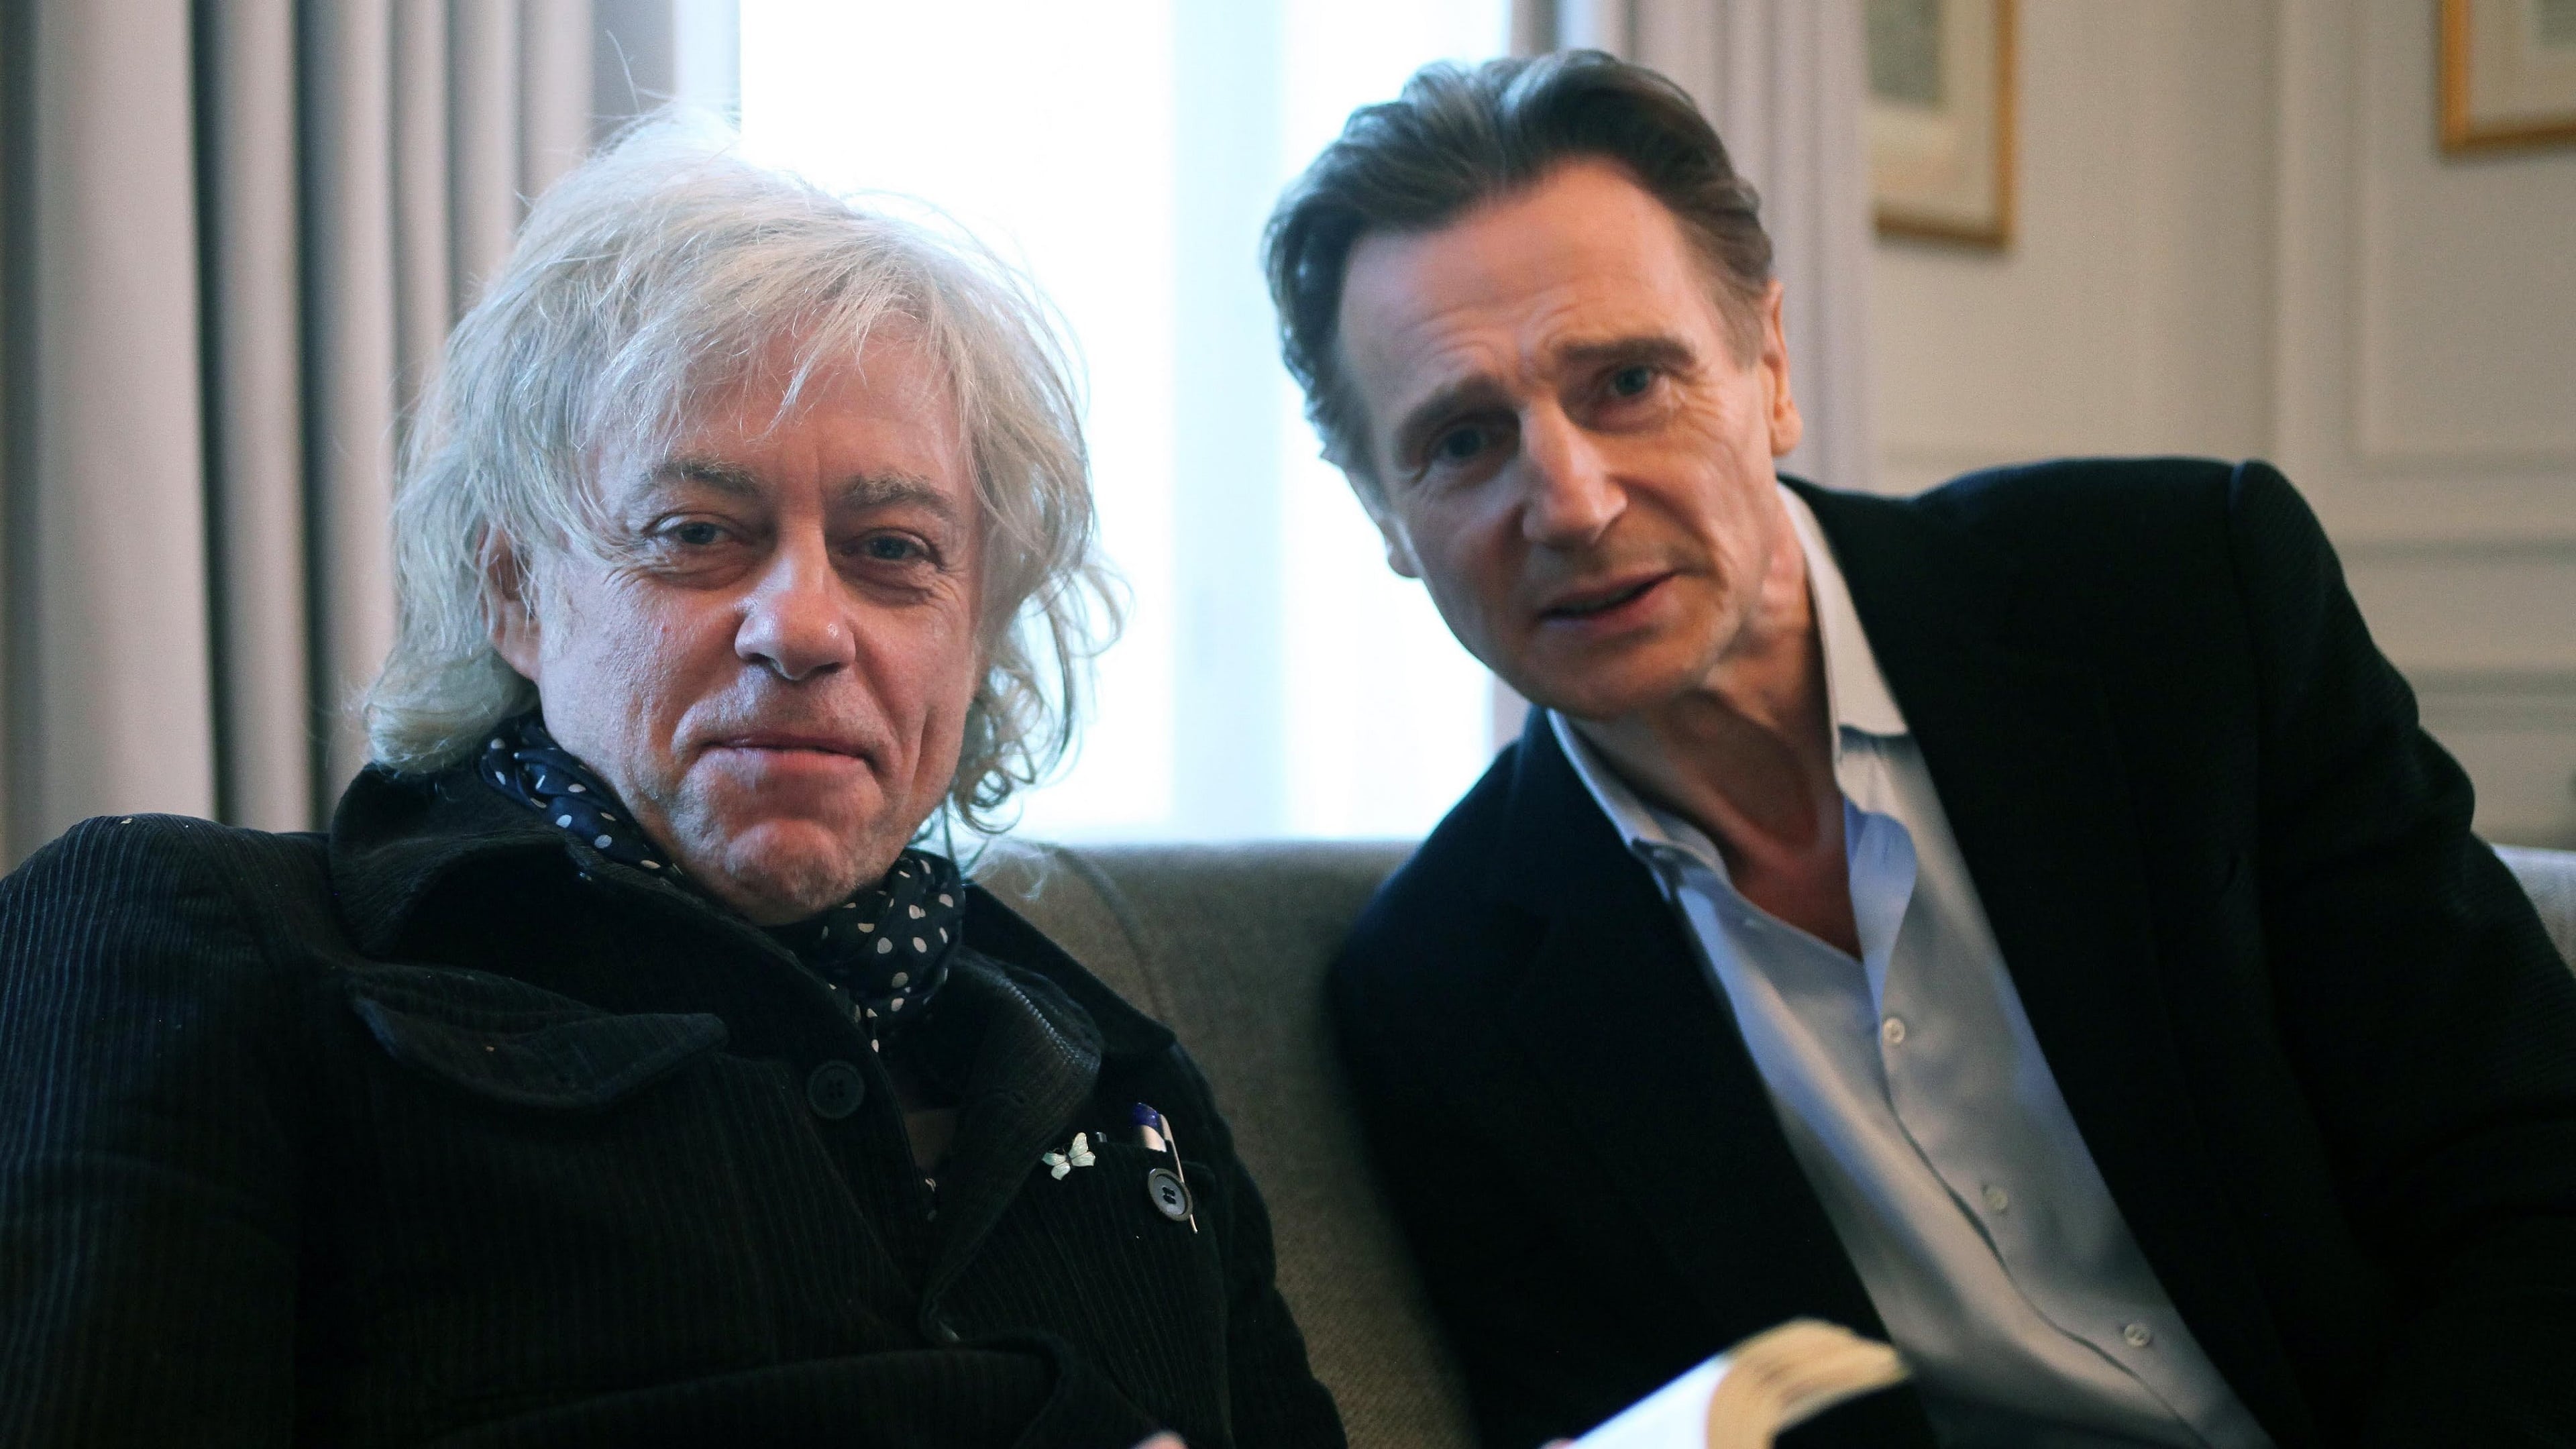 A Fanatic Heart: Geldof On Yeats 2016 123movies